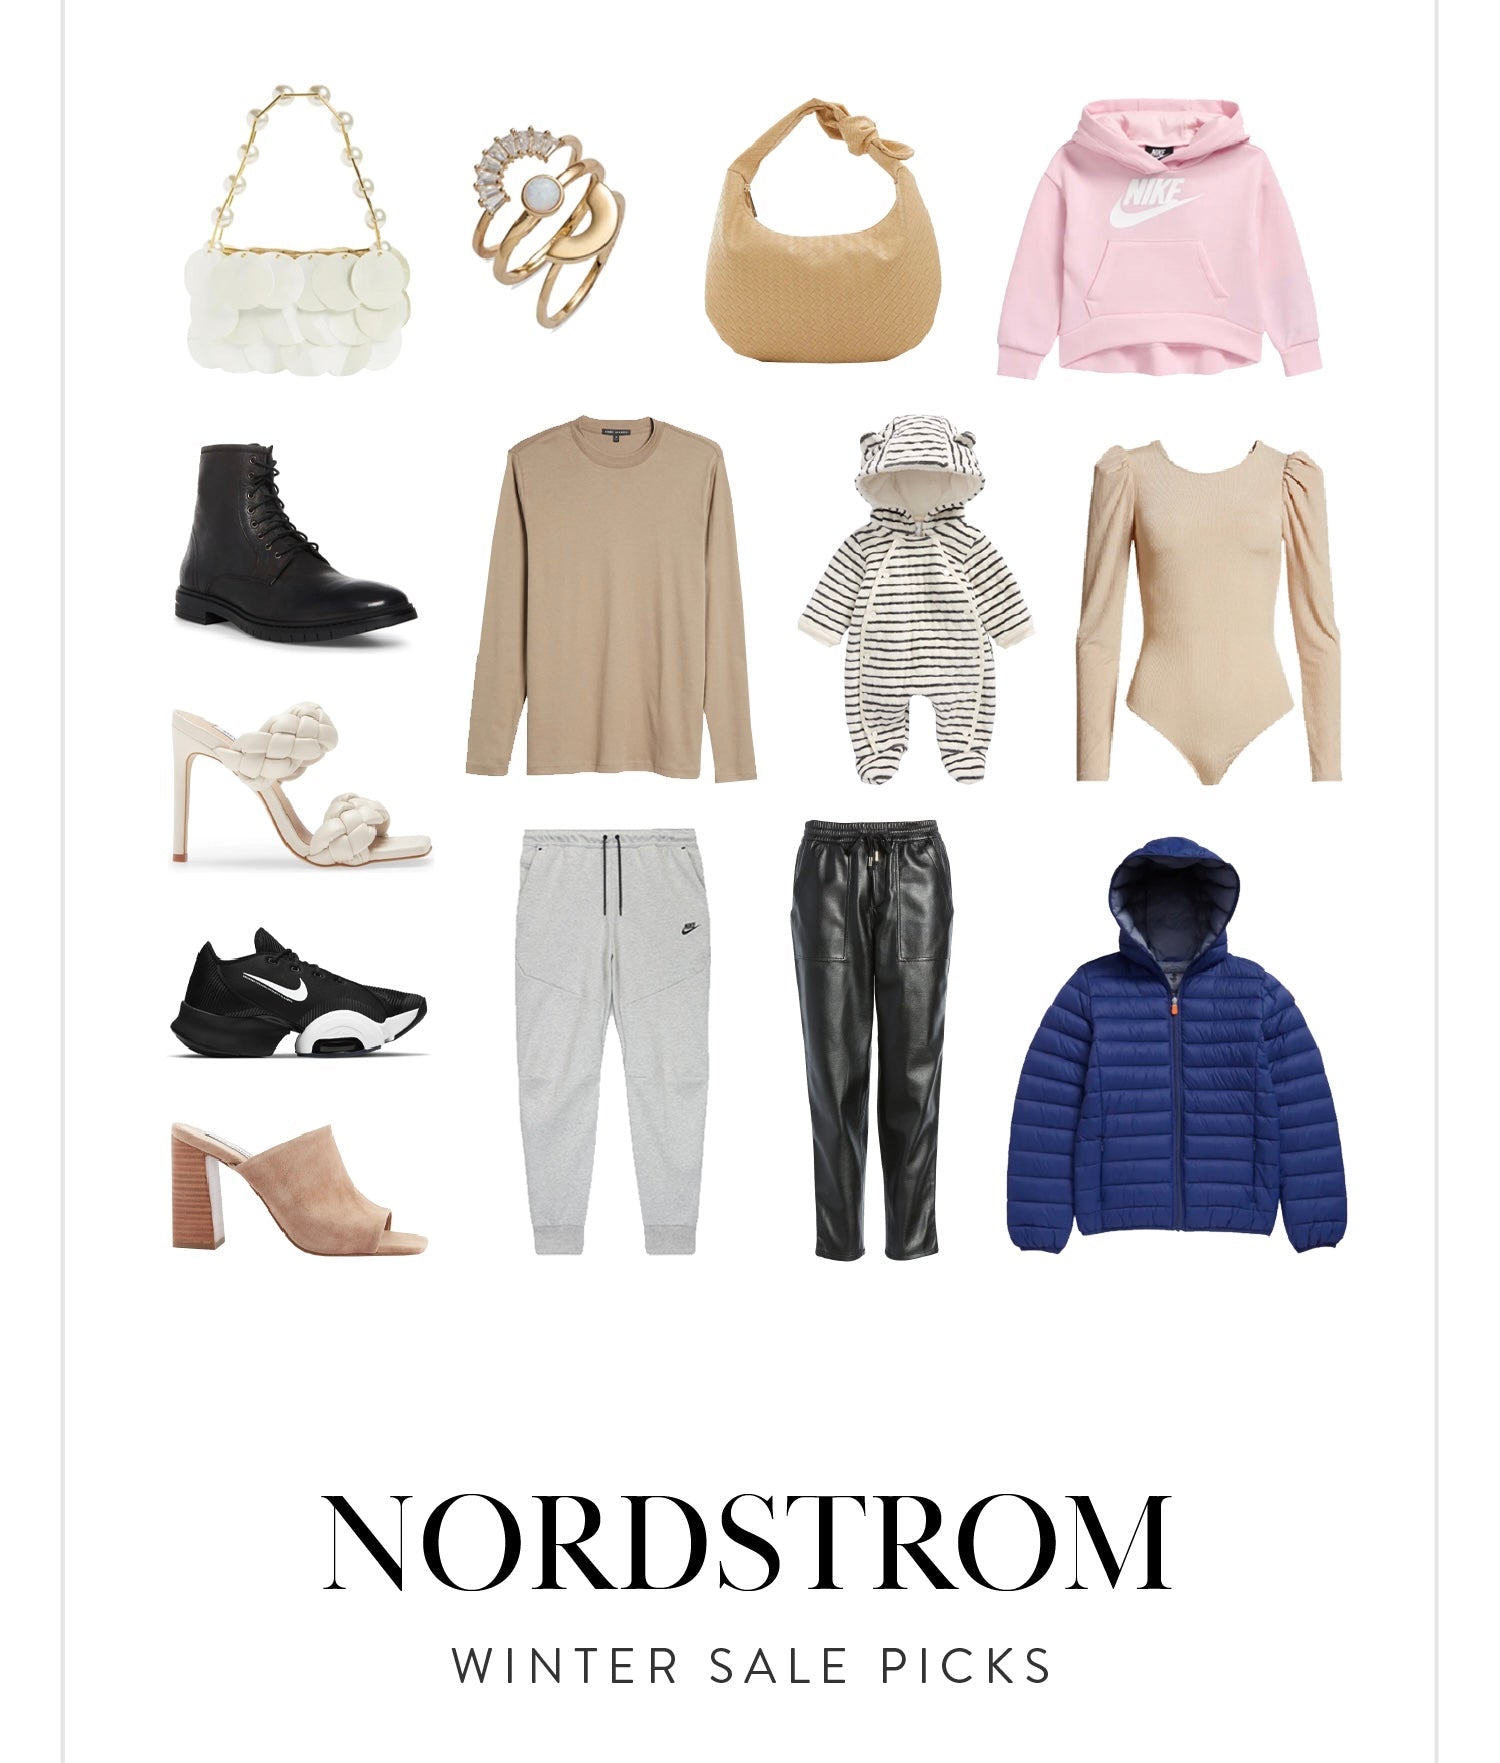 My Nordstrom Winter Sale Picks